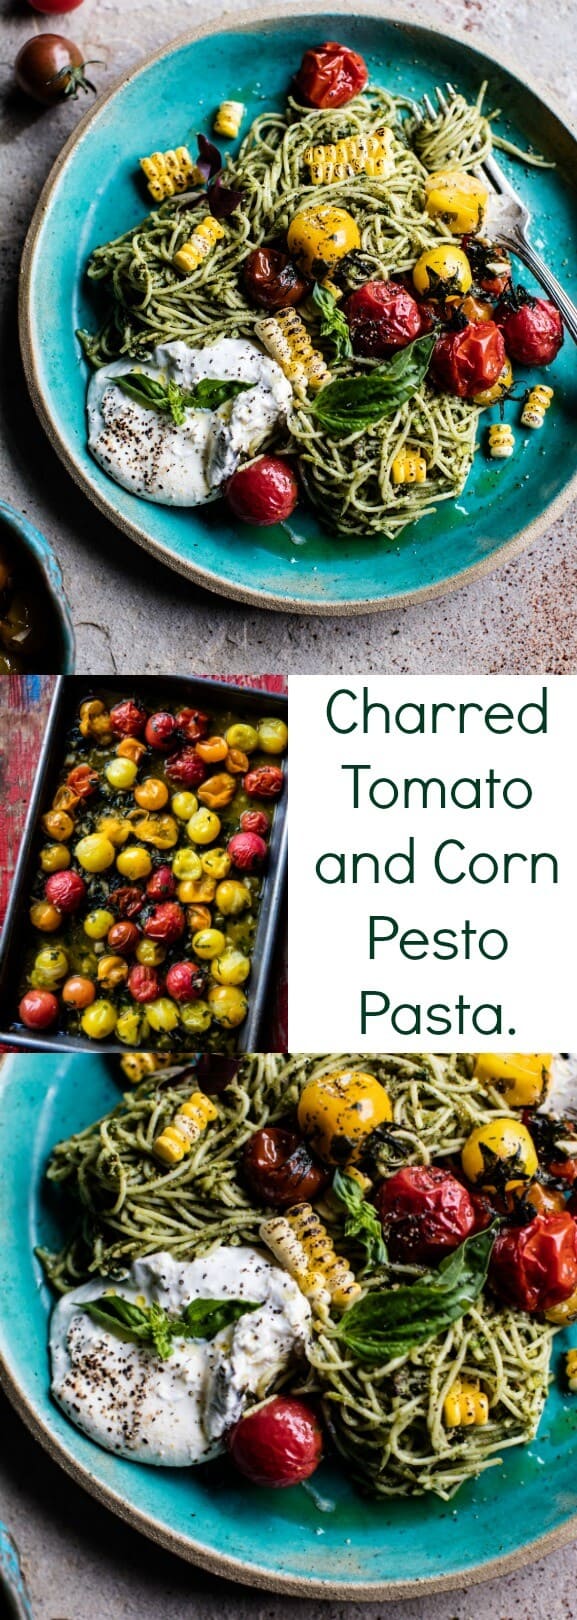 Charred Tomato and Corn Pesto Pasta | halfbakedharvest.com @hbharvest